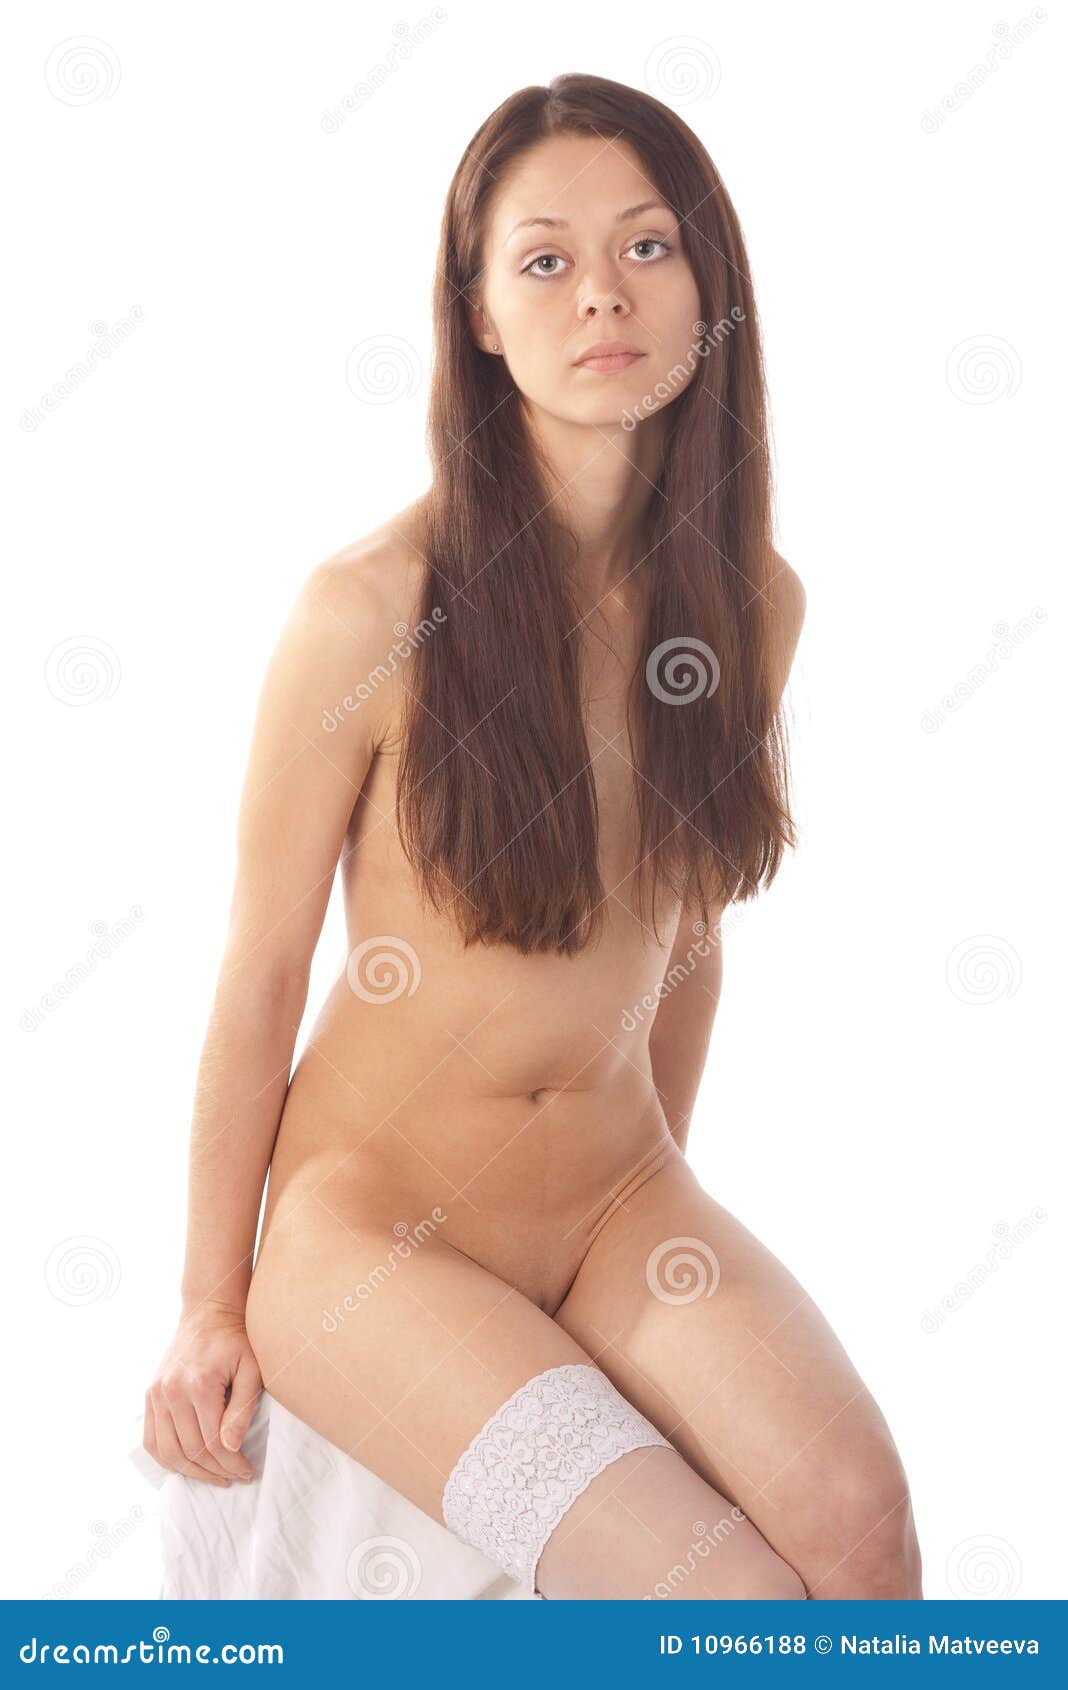 Naked girls sitting on